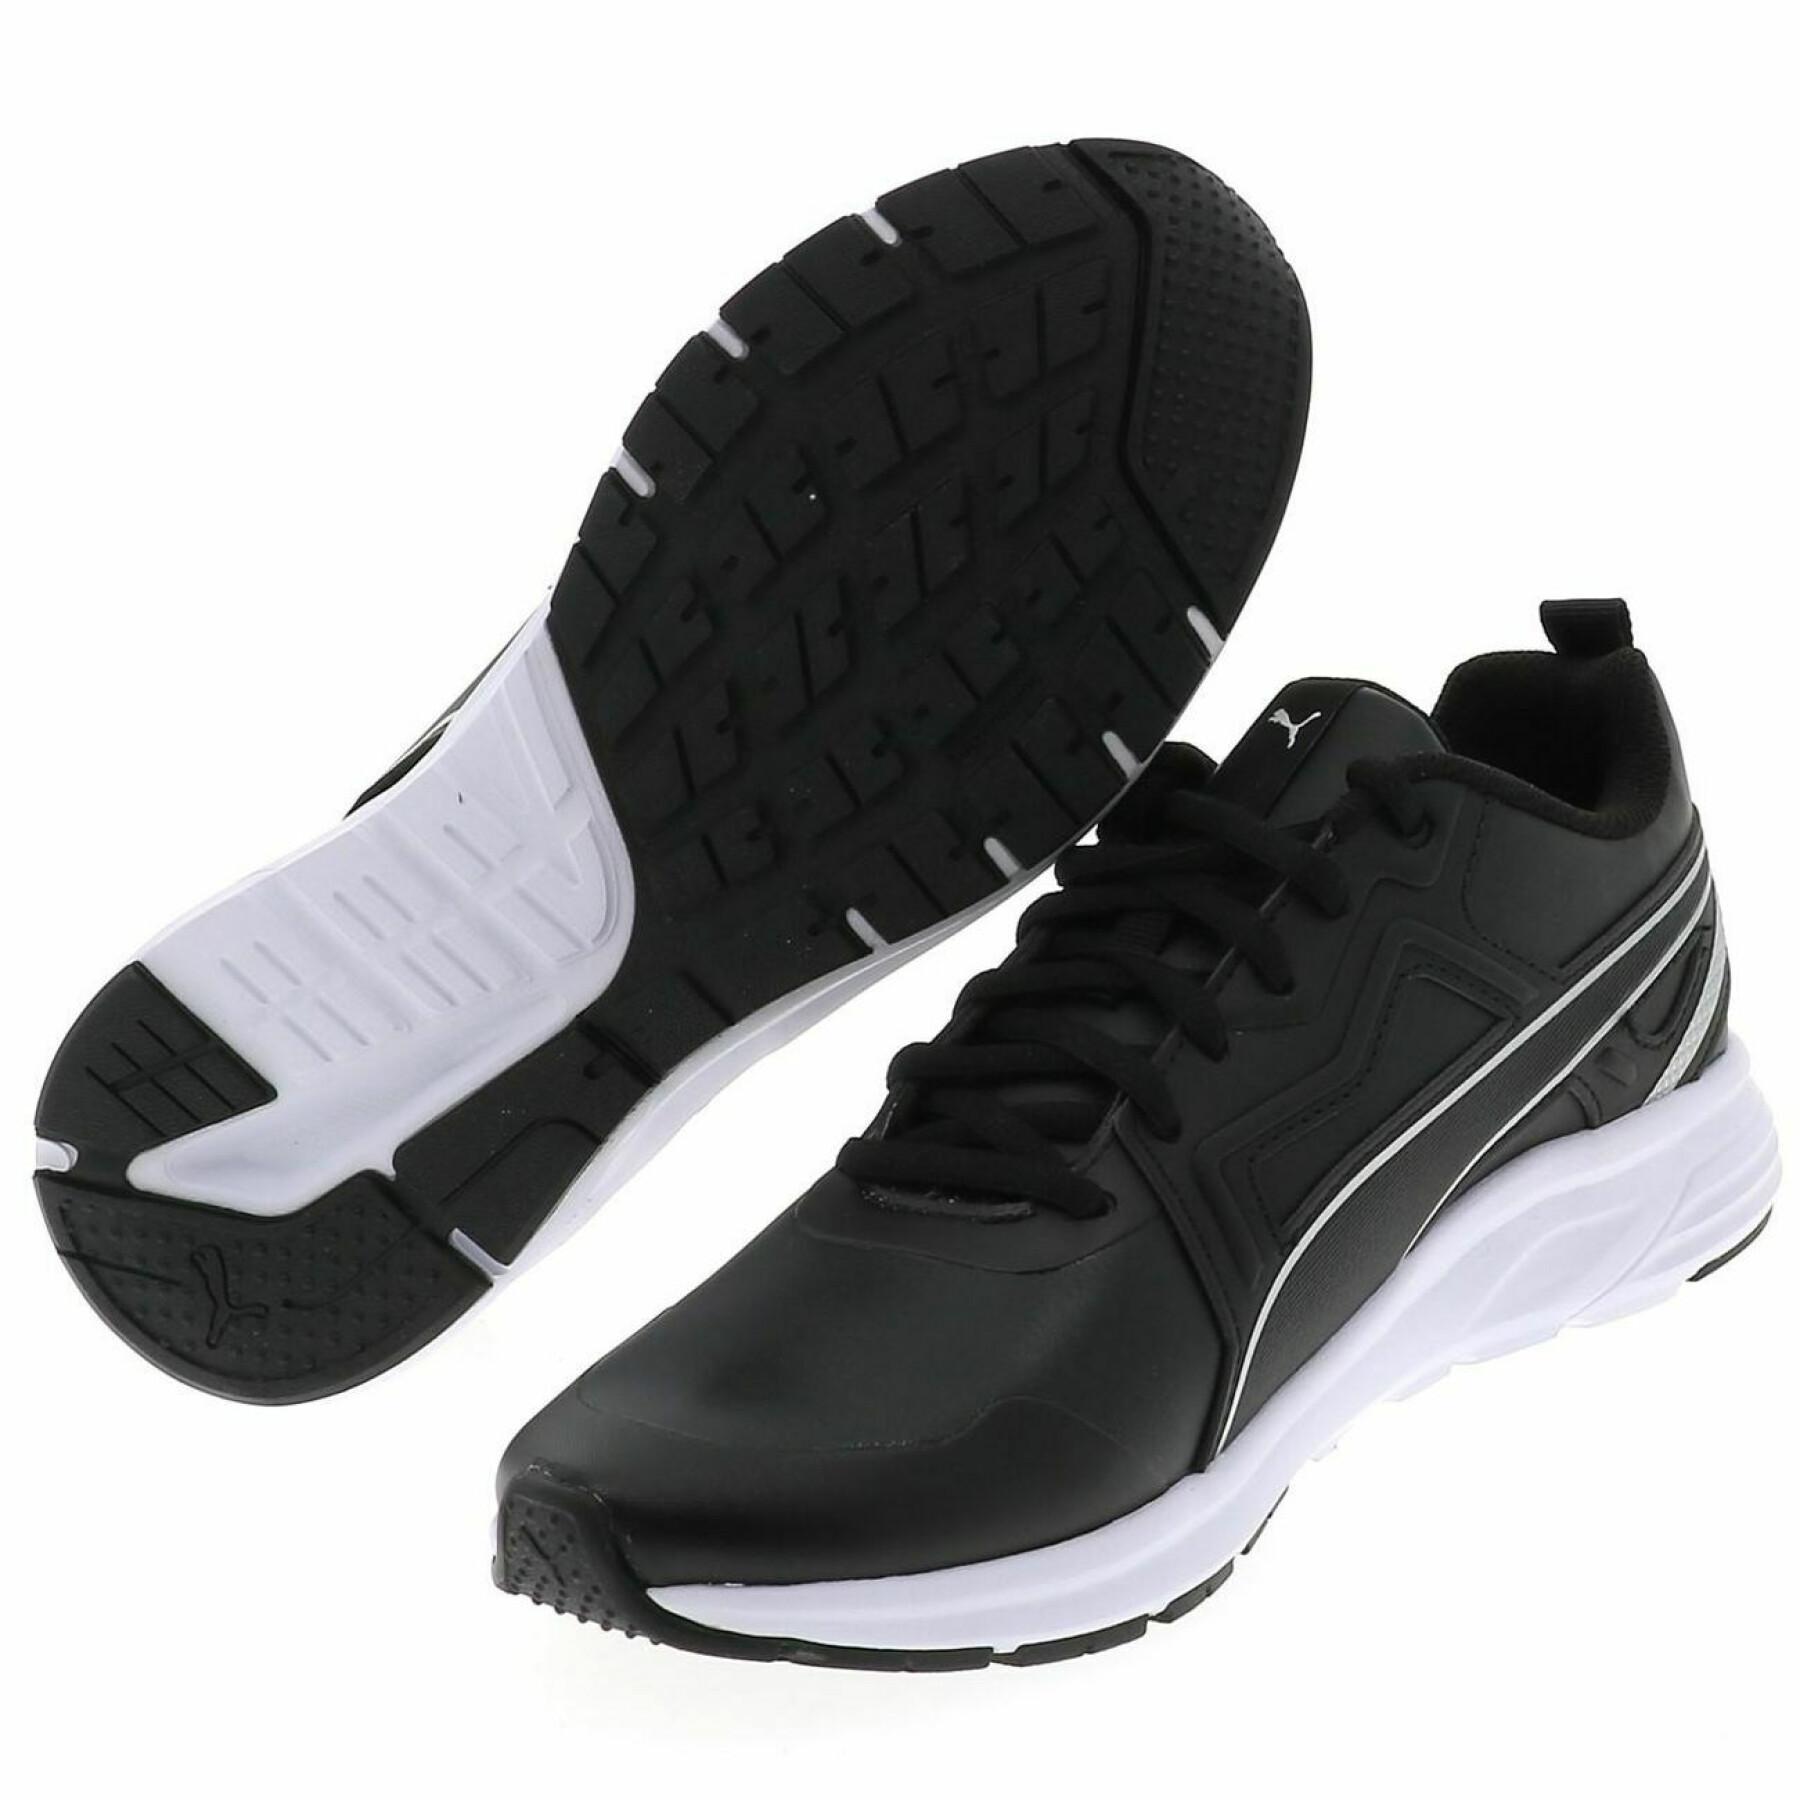 Zapatos Puma Pure jogger